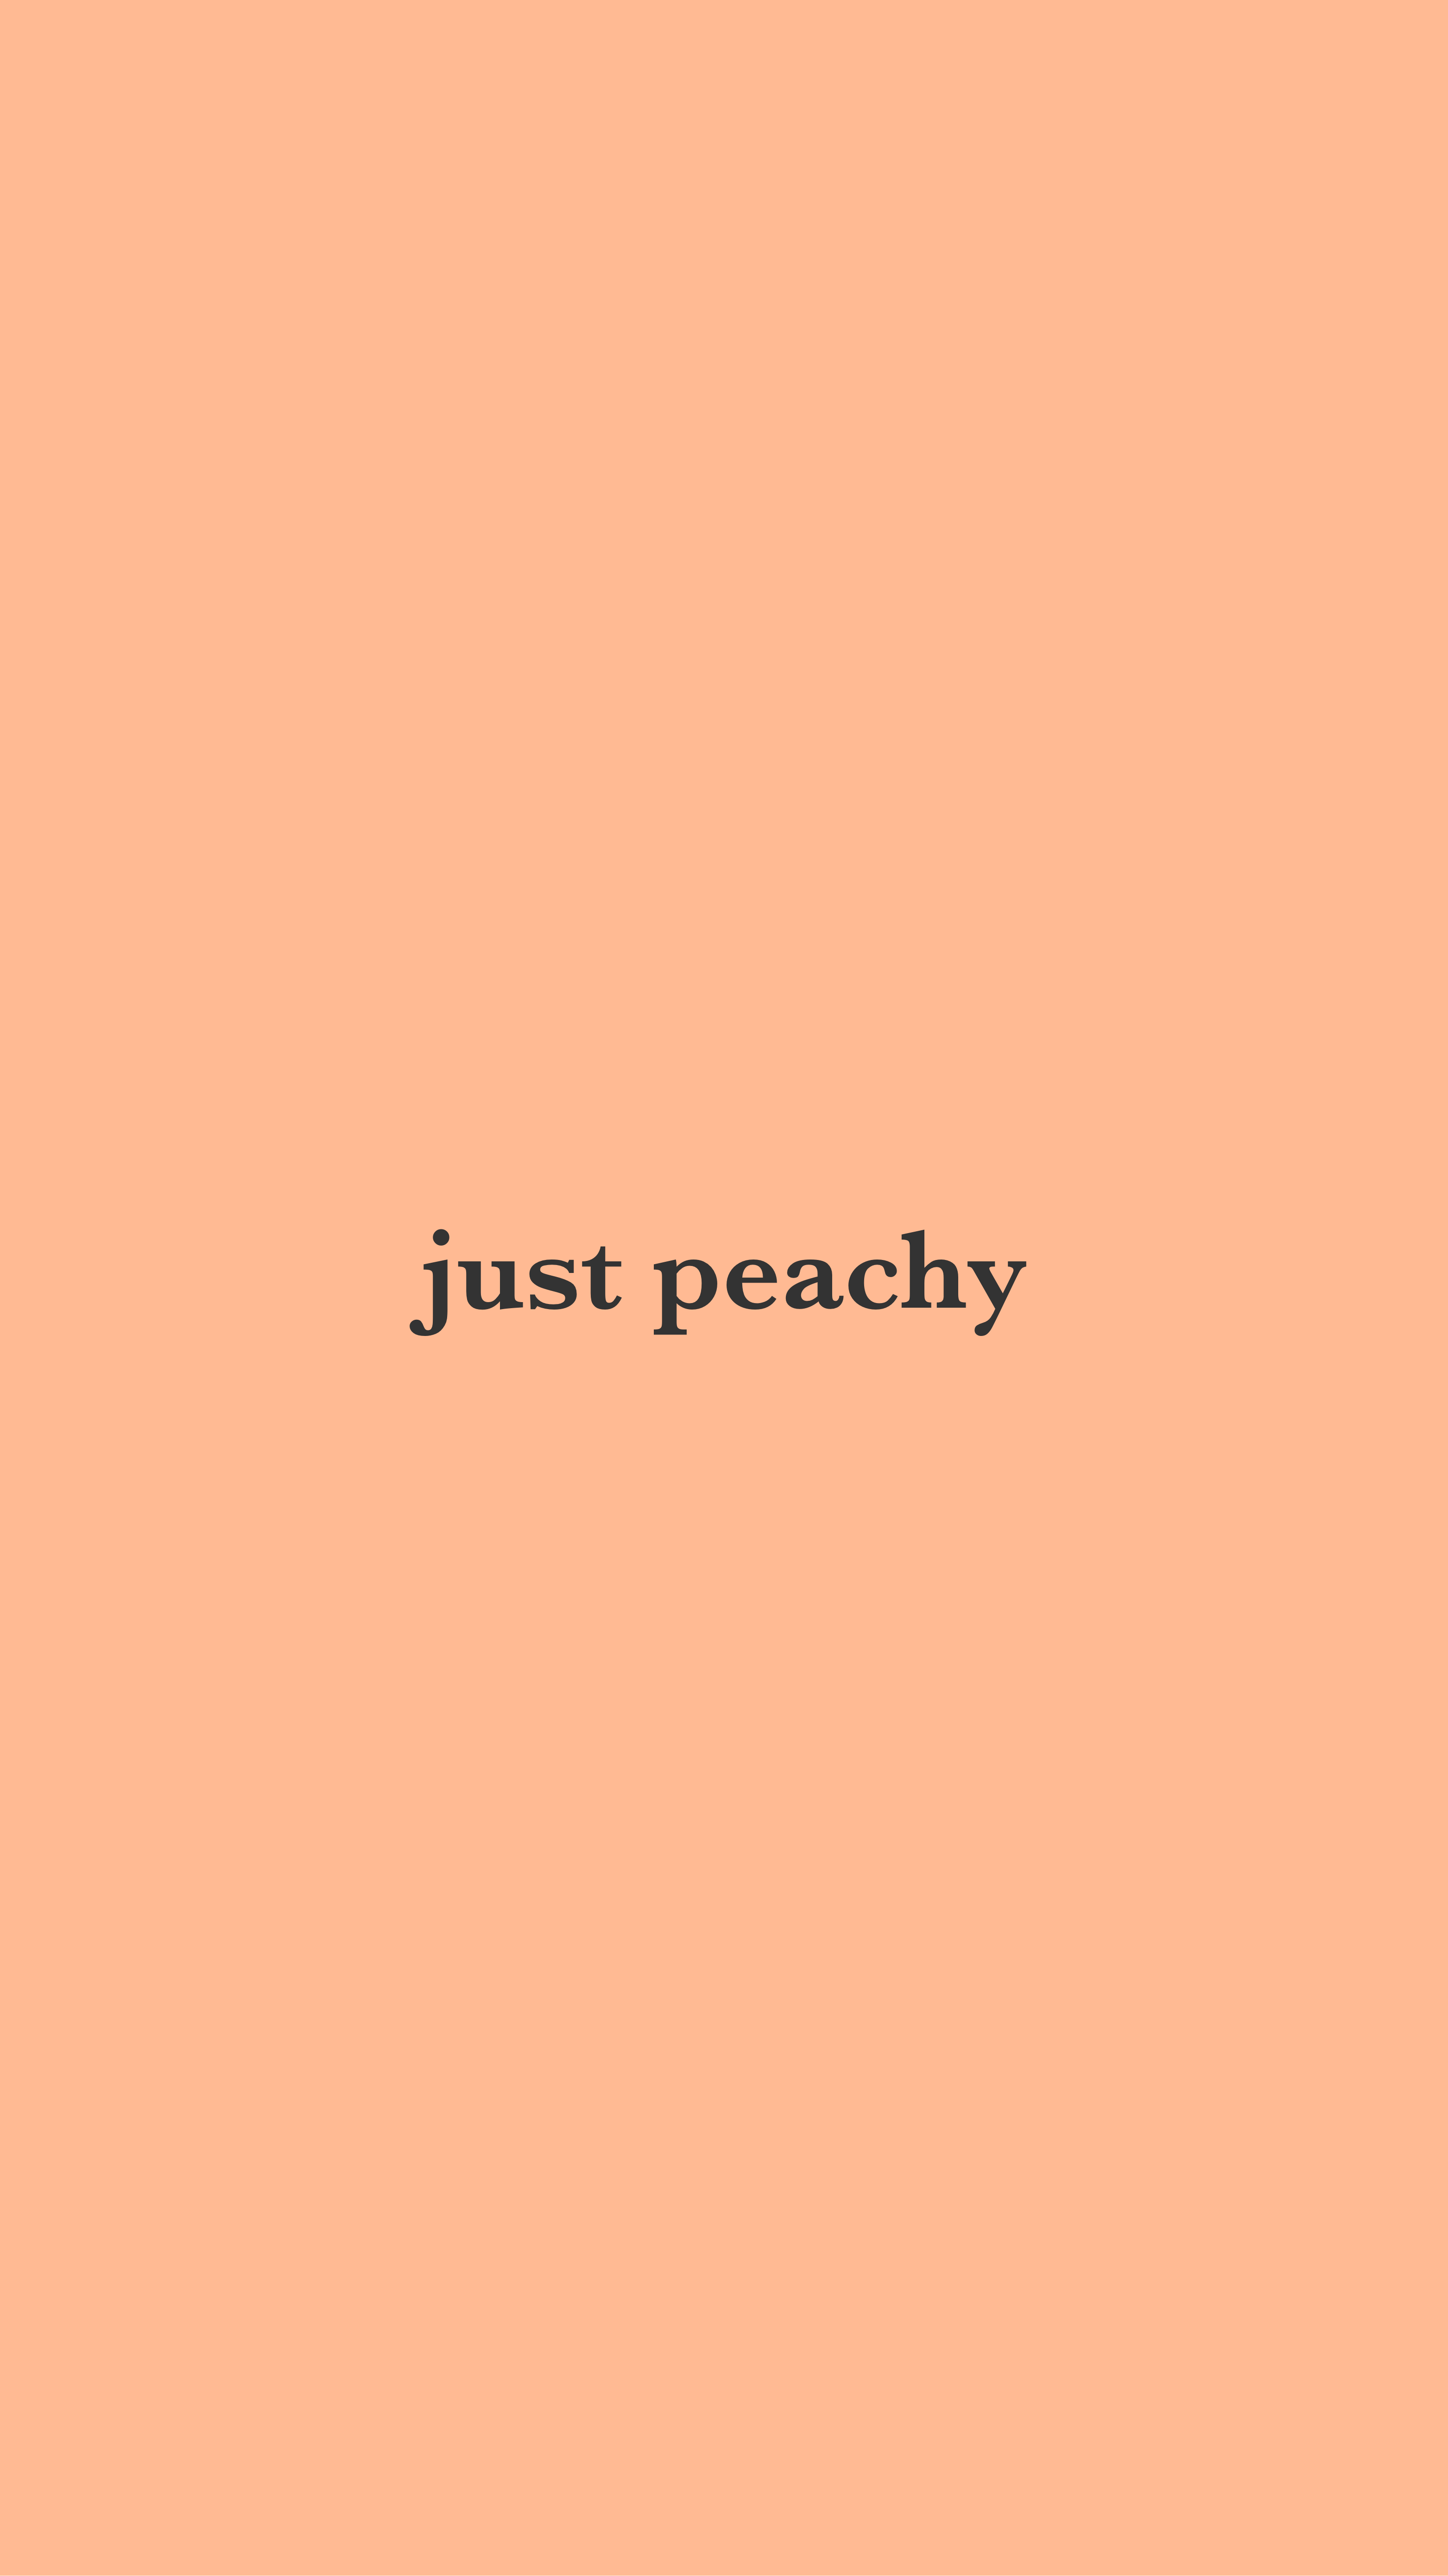 iphone wallpaper :). Peach wallpaper, Just peachy, Vaporwave